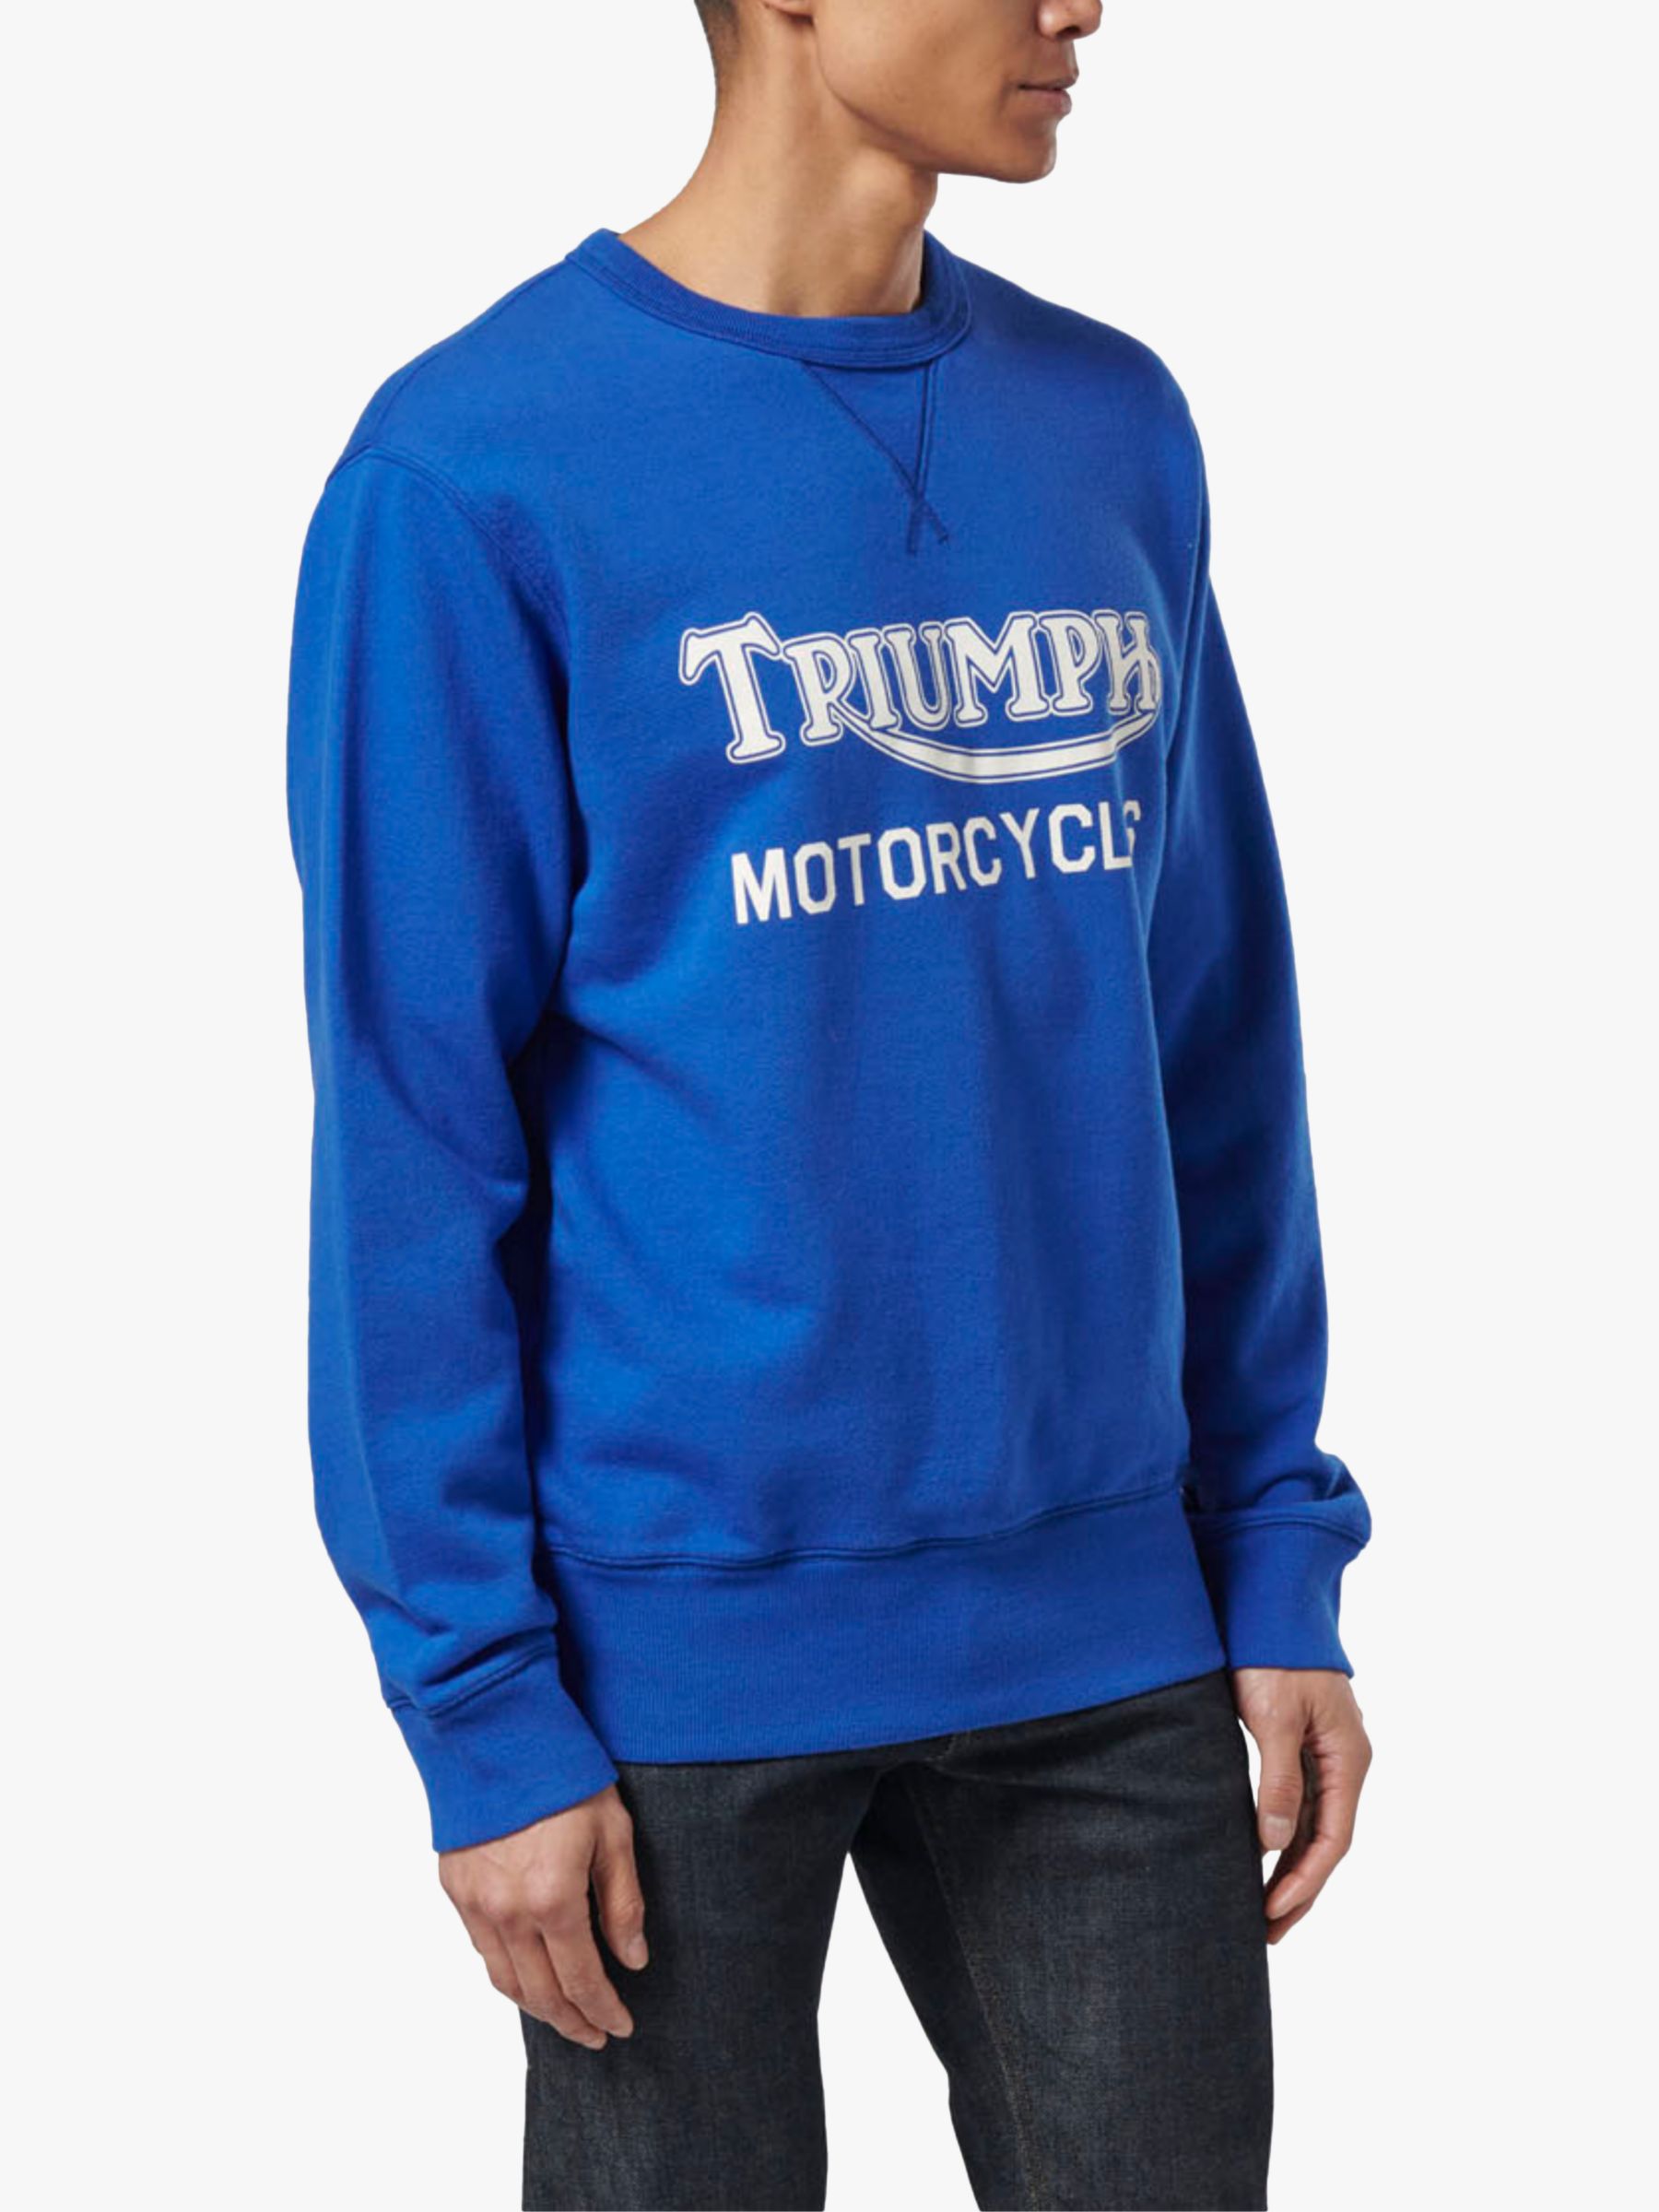 Triumph Motorcycles Radial Sweatshirt, Colbalt, S